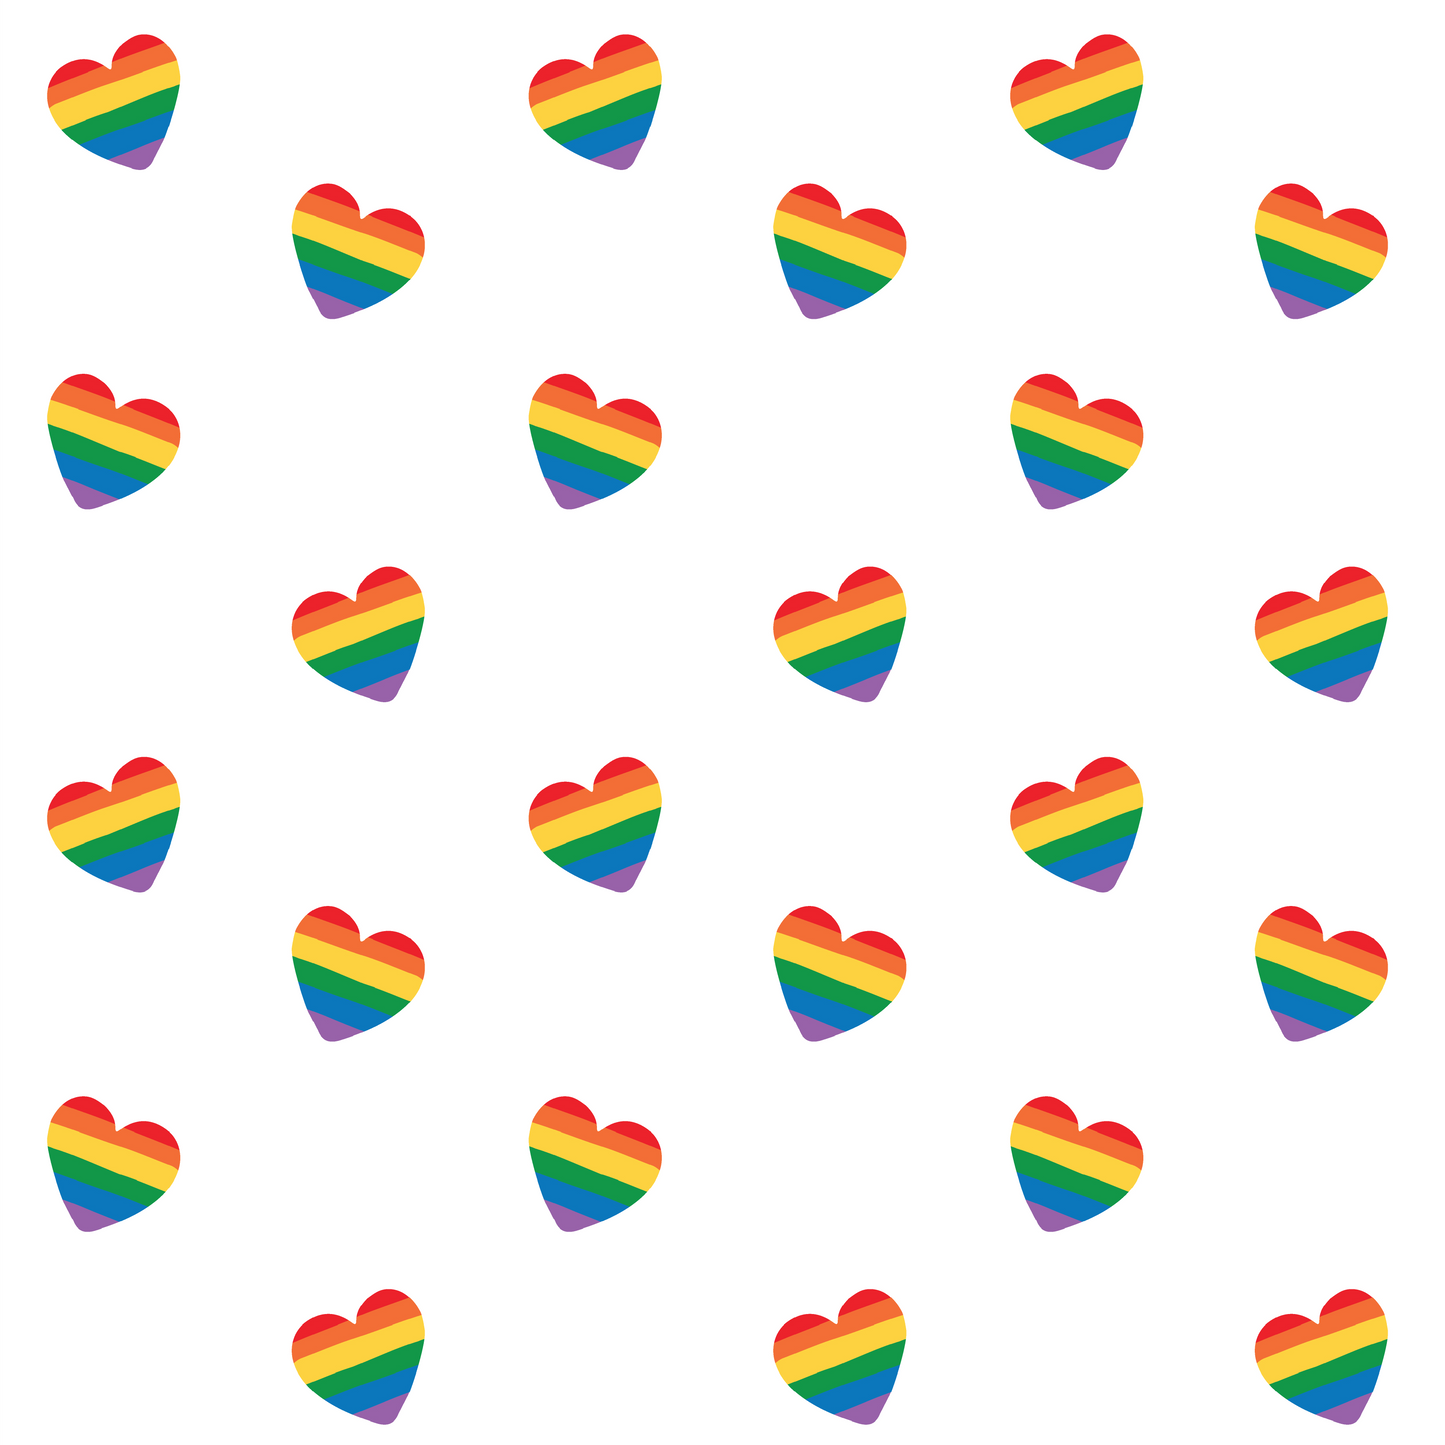 Rainbow - Rainbow Hearts on White Background 005